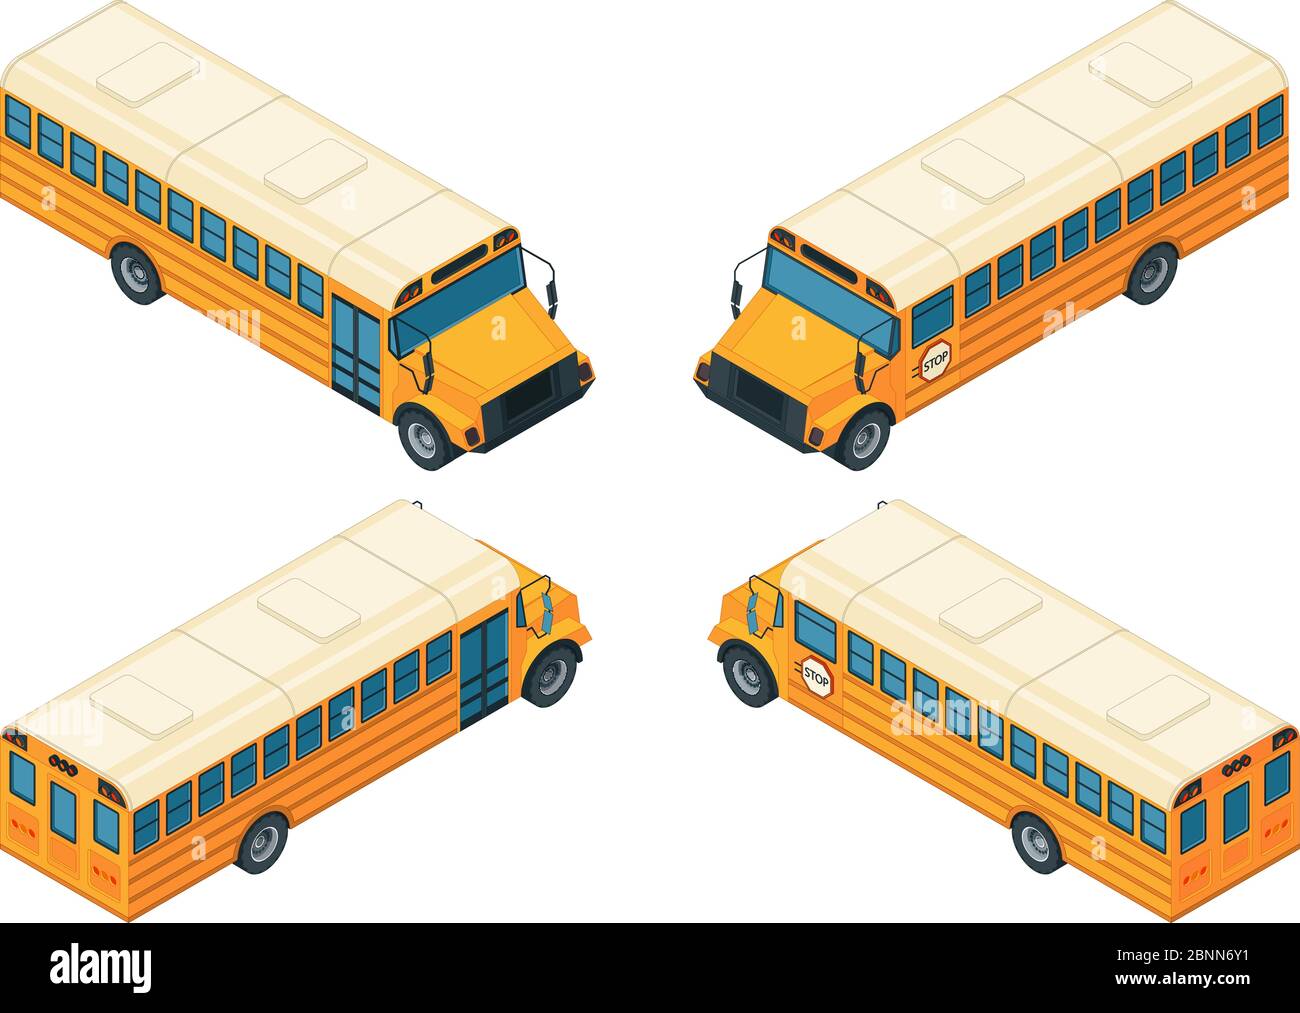 School bus isometric. Various views of school bus Stock Vector